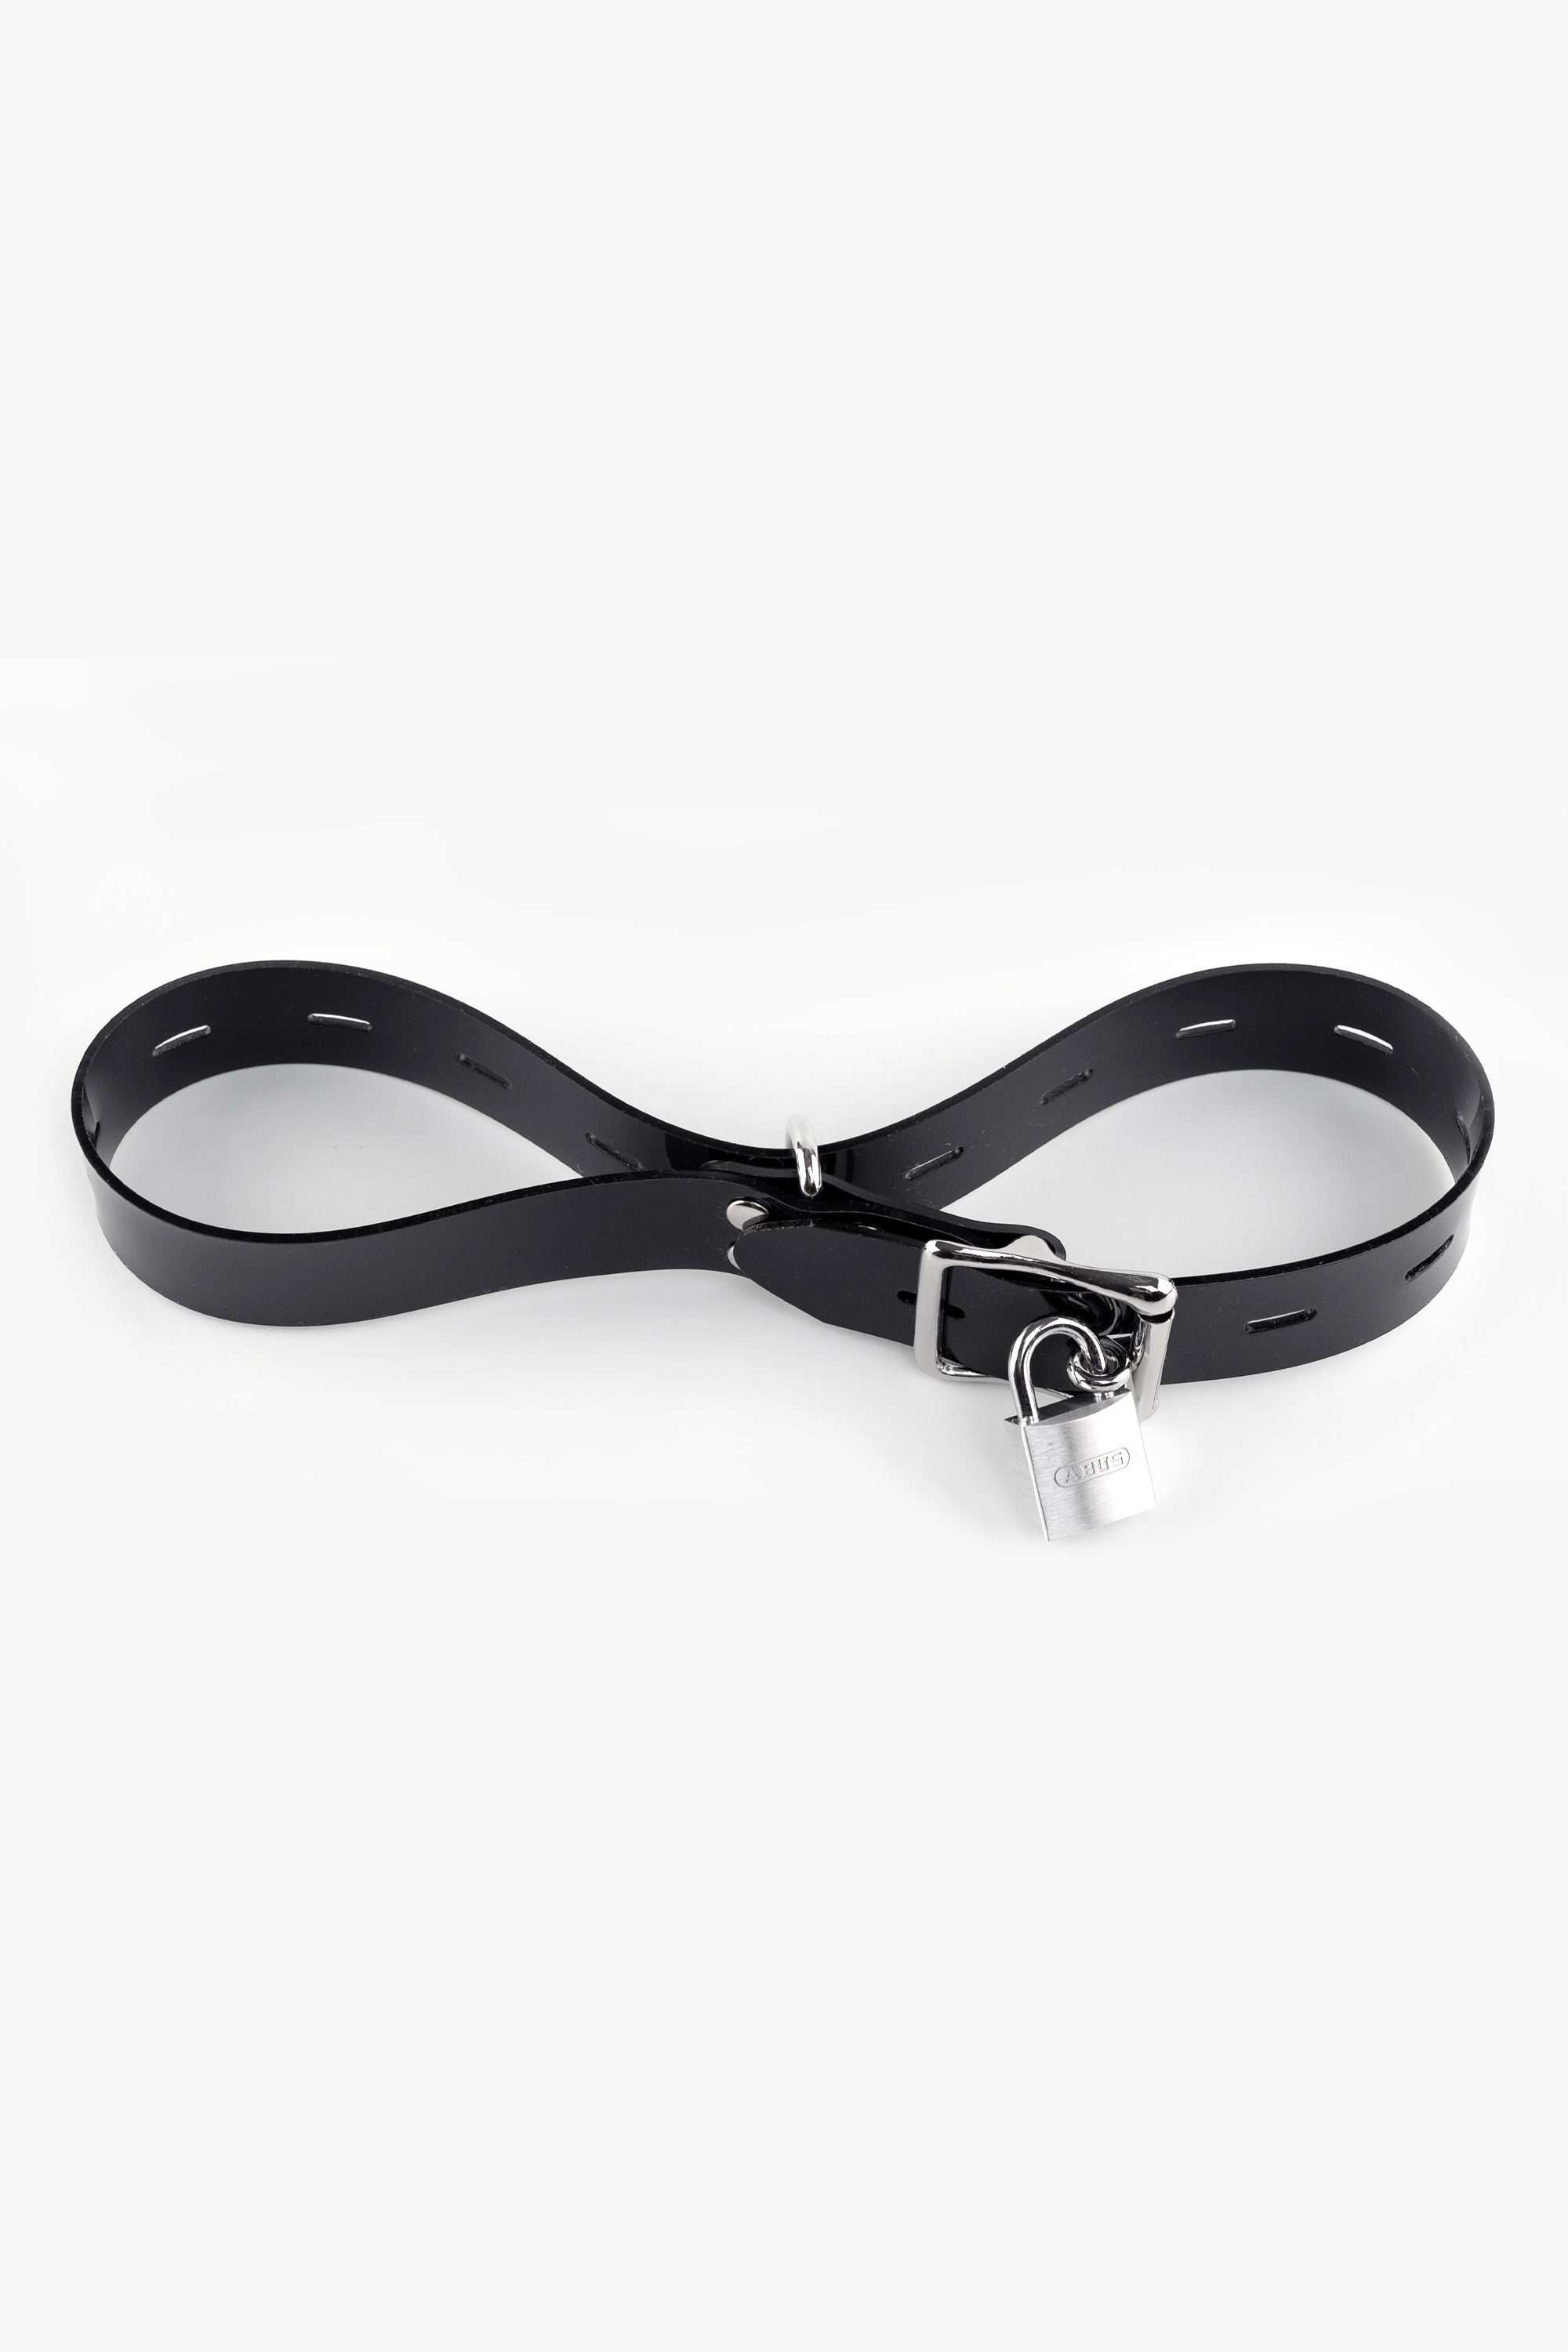 Bondage lockable straps set 25 mm, black/chrome